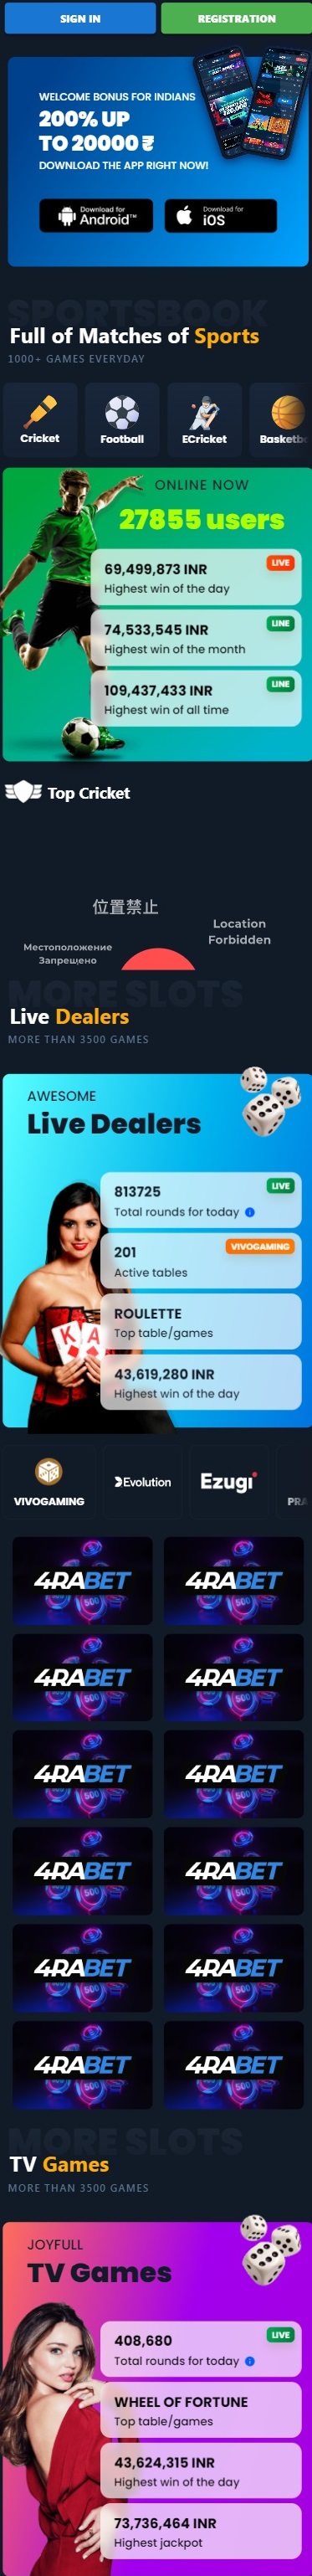 4Rabet Casino Betting Site in India - mobile